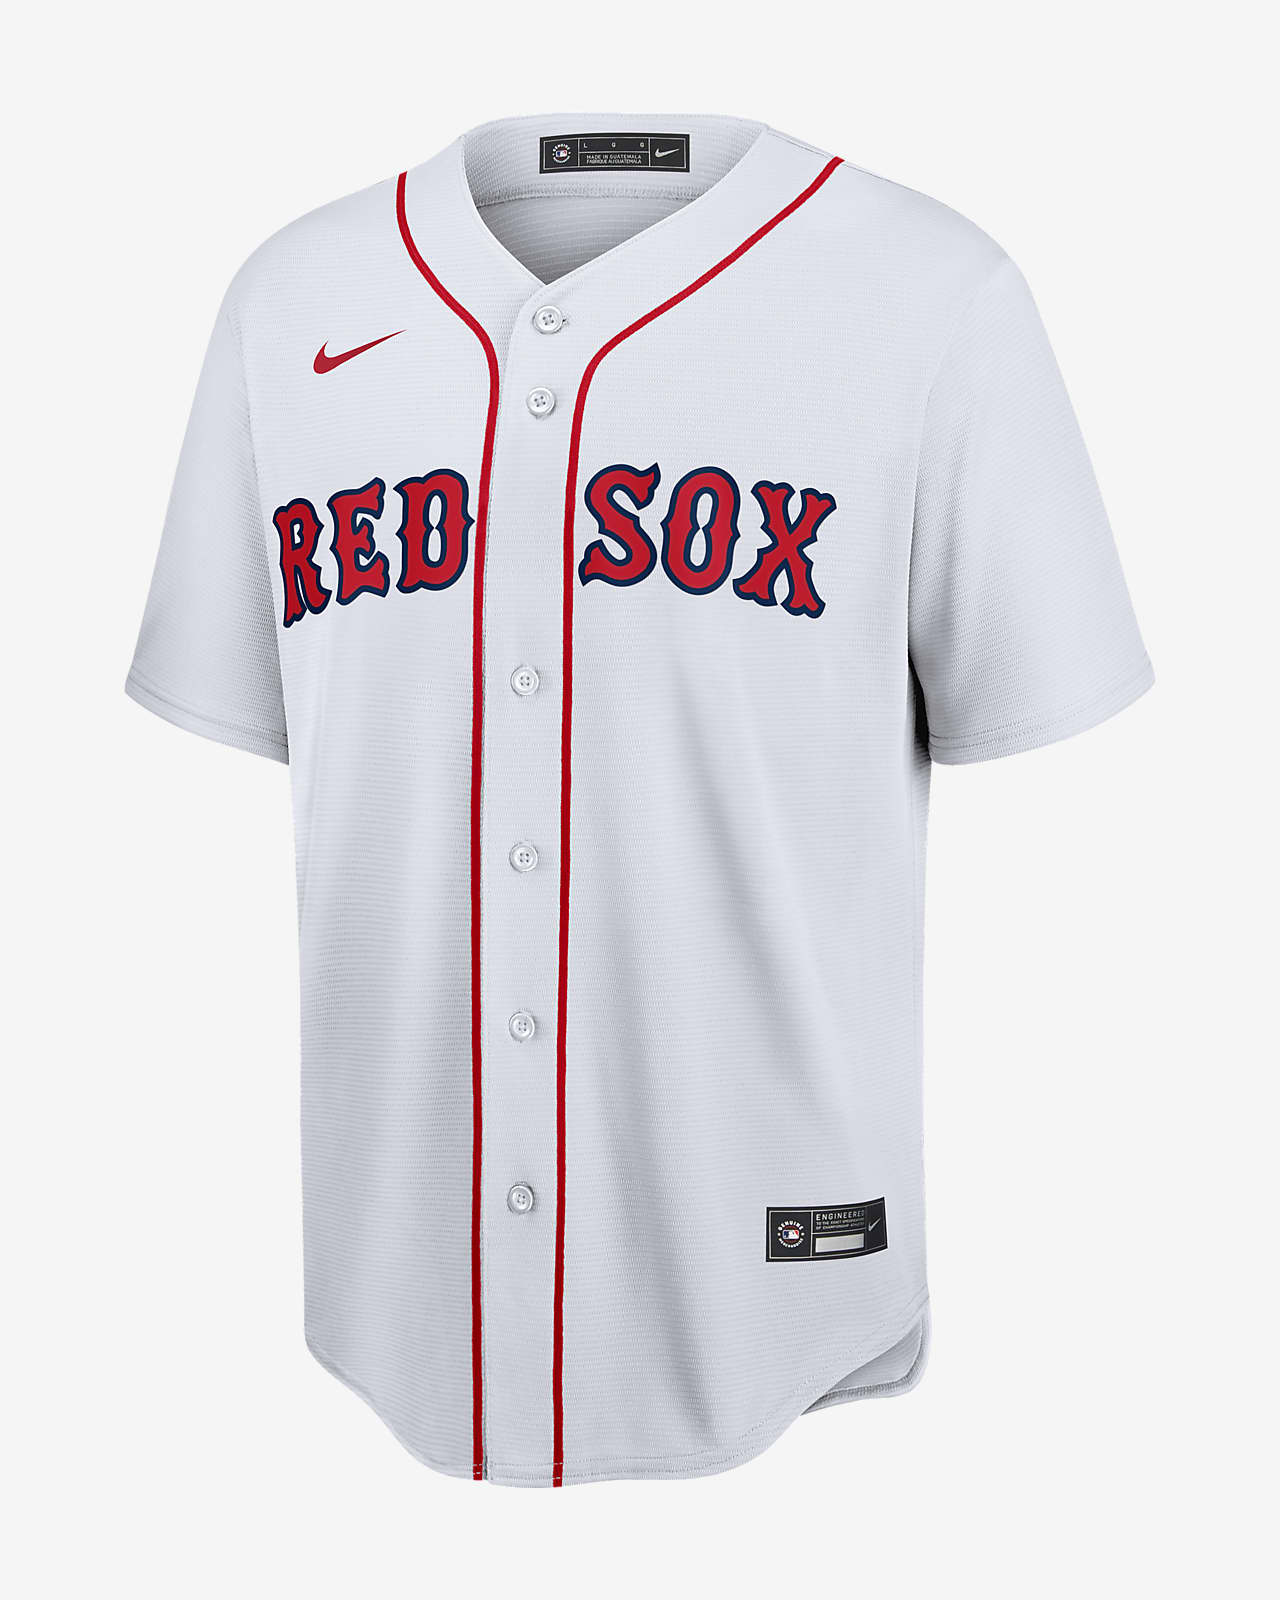 MLB Boston Red Sox Men's Replica Baseball Jersey.